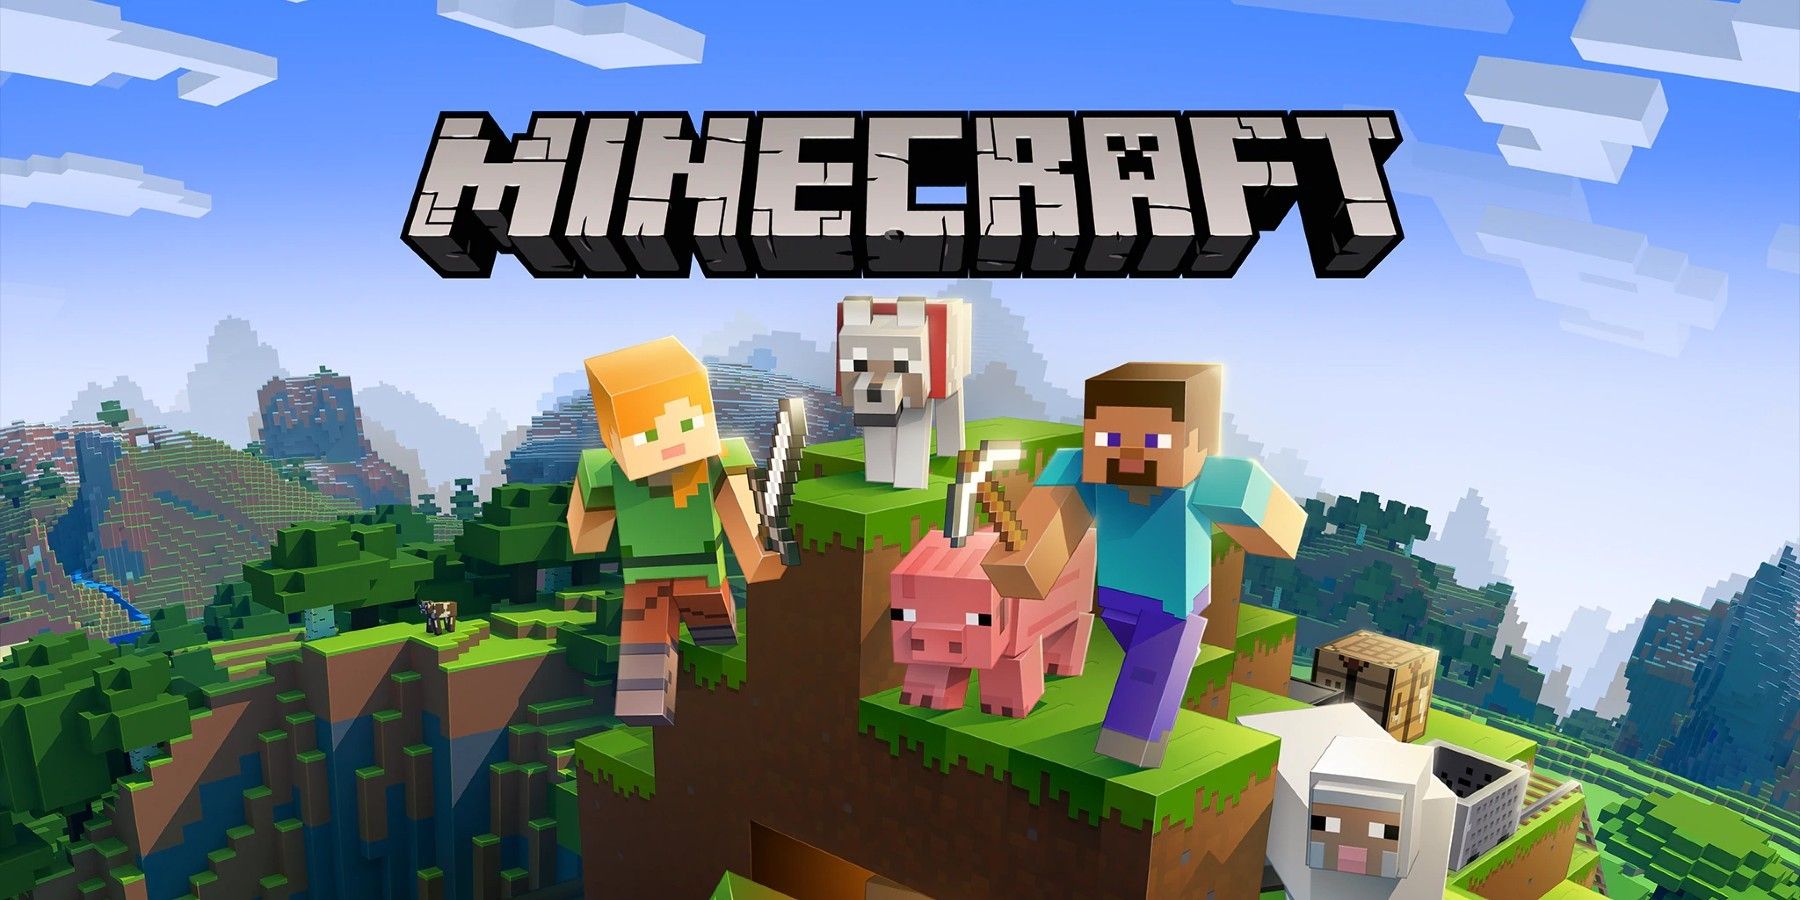 Minecraft Player Makes Real-Life Jack O'Lantern Based on Game's Pumpkins